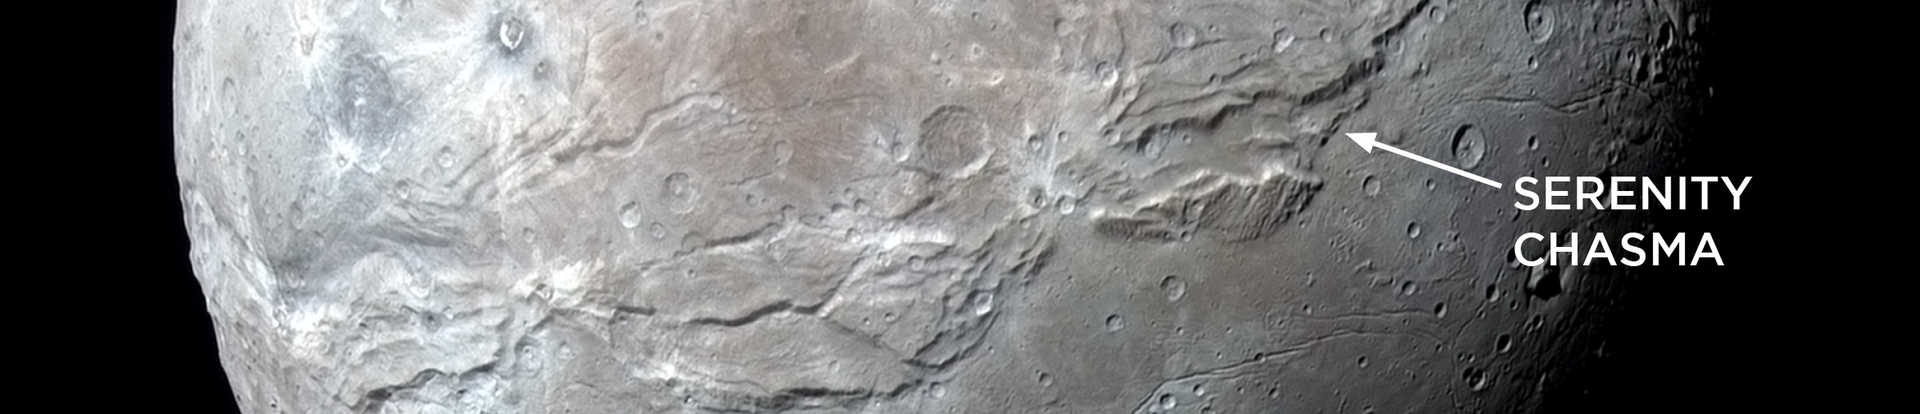 Press Release: SwRI models explain canyons on Pluto moon